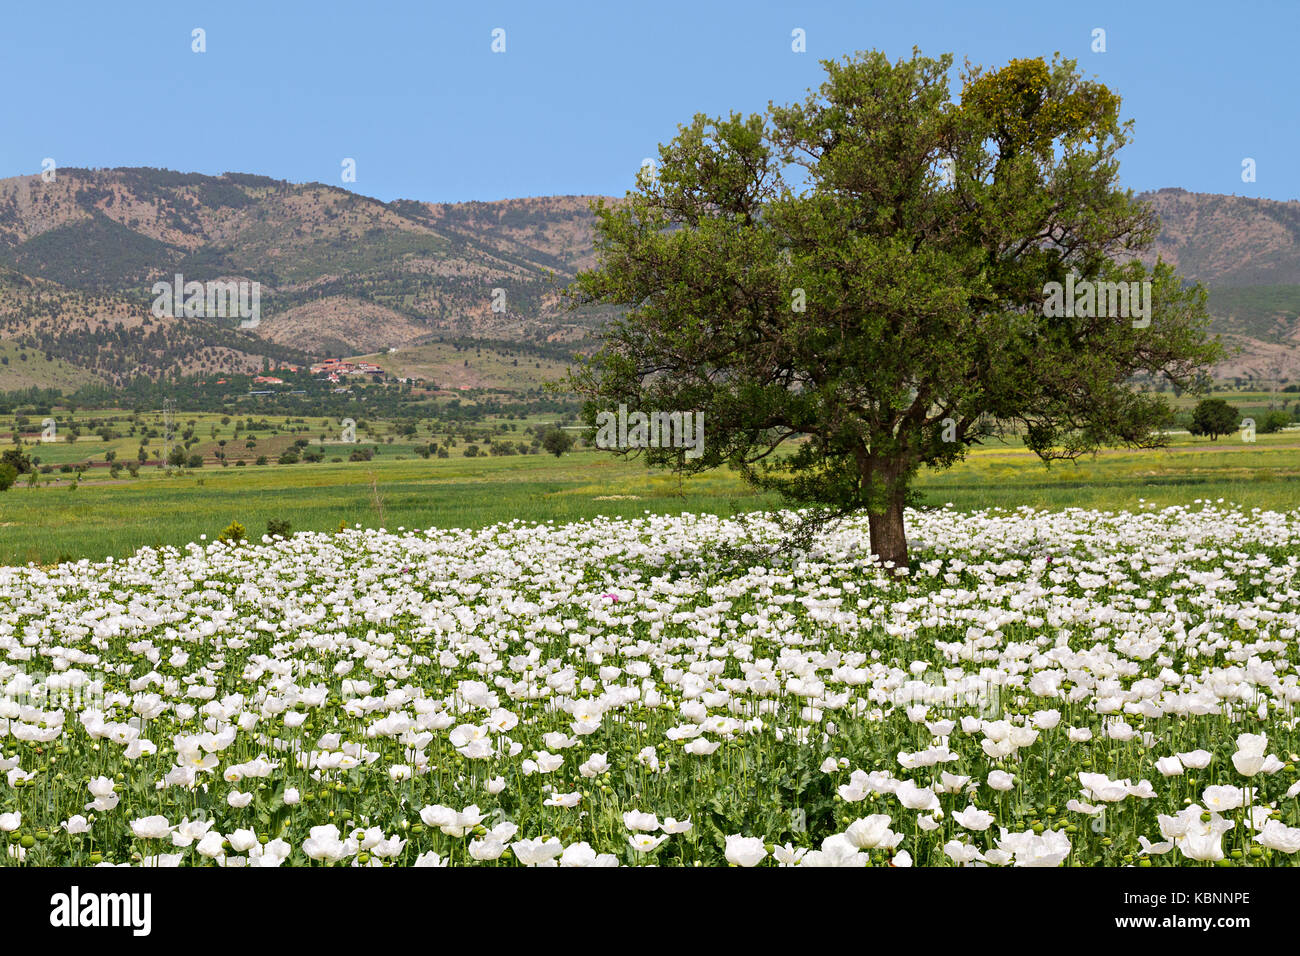 Opium poppy fields in Turkey. Stock Photo